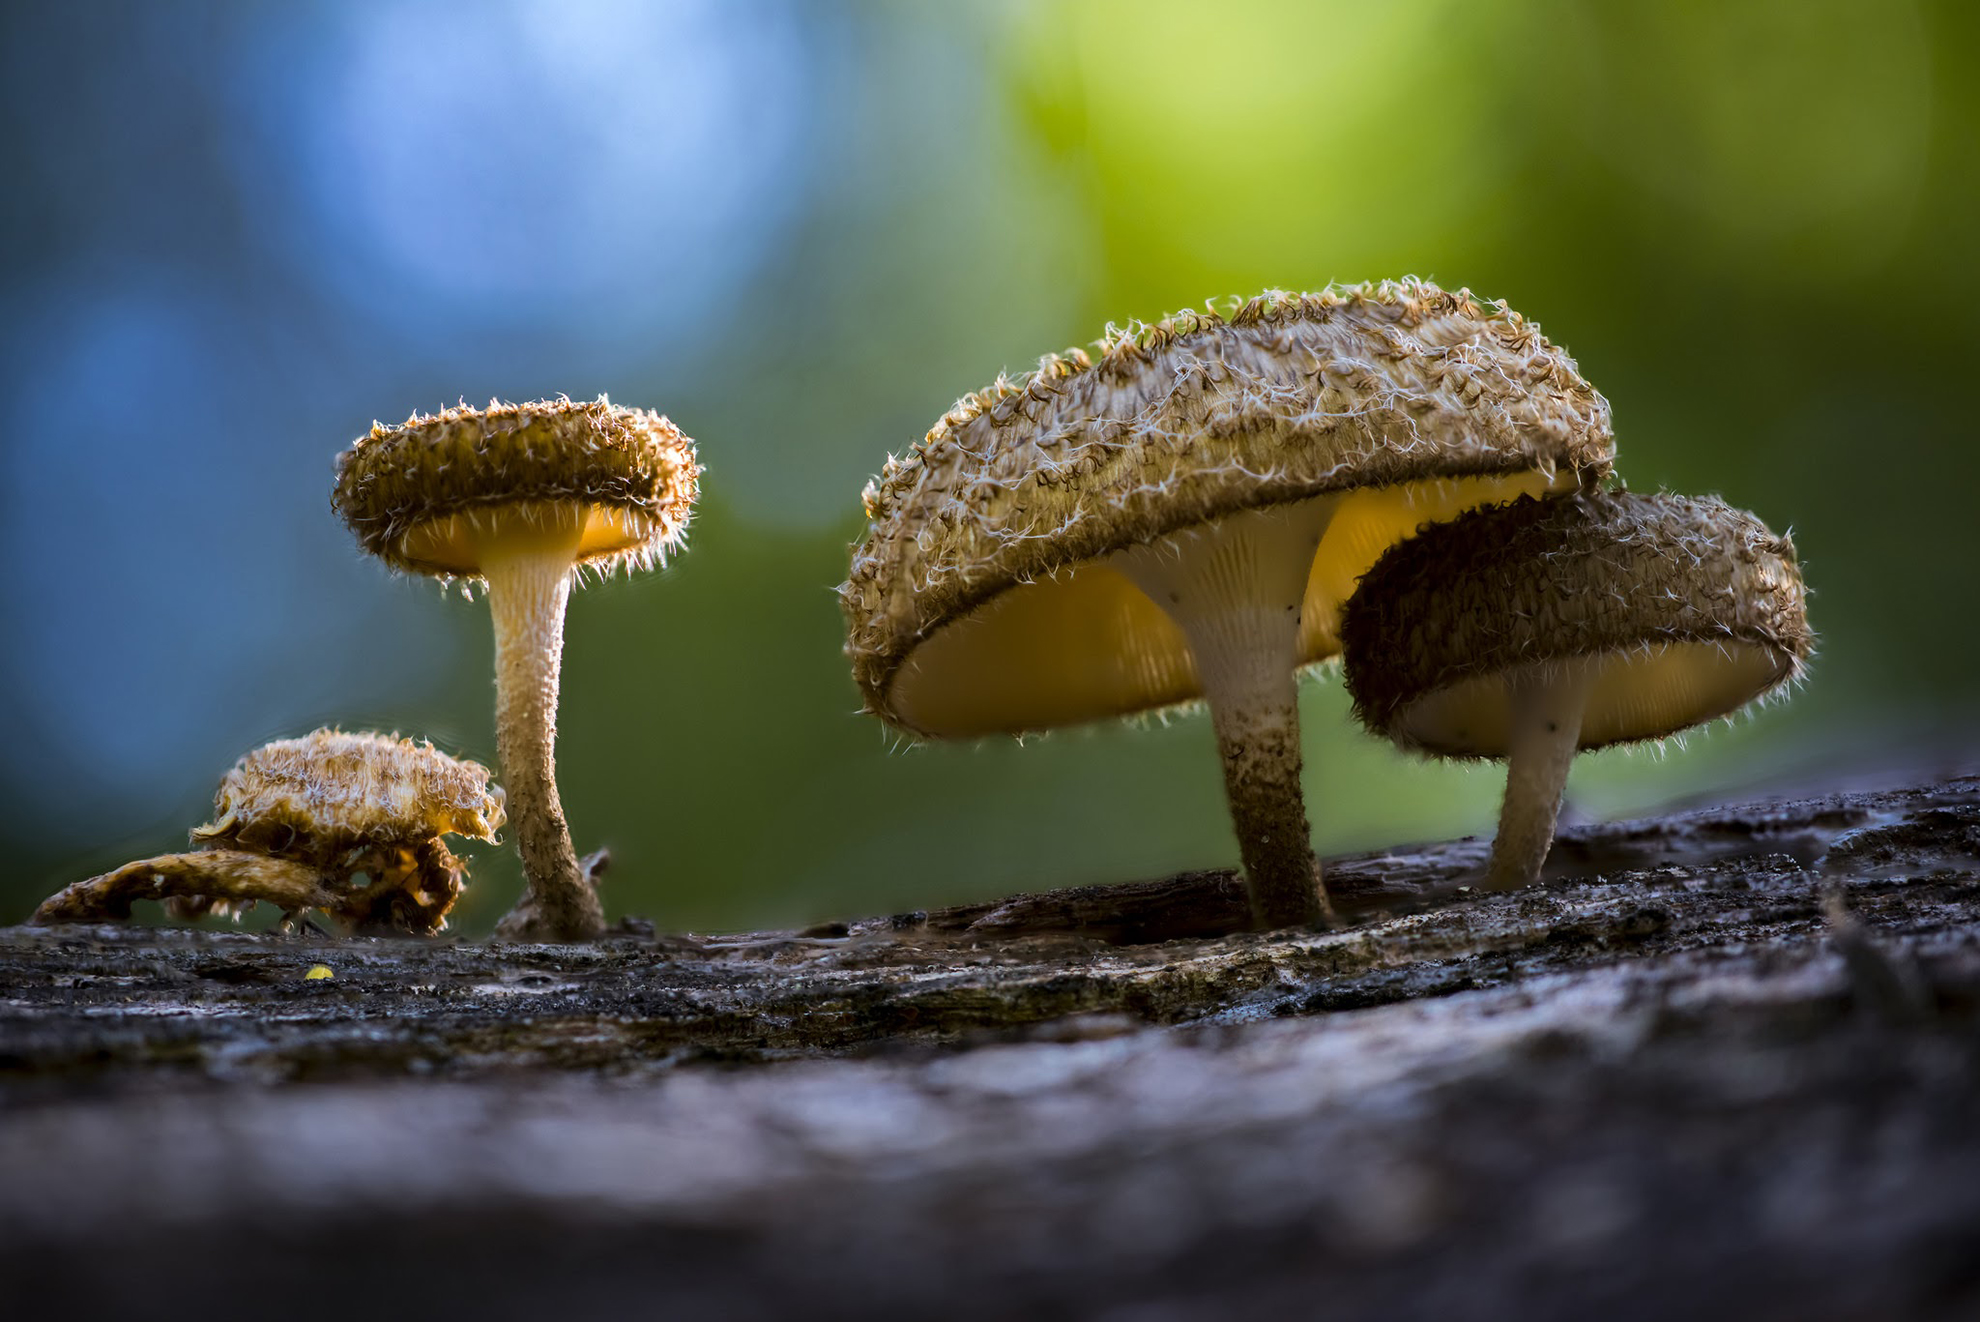 Macro image of furry textured mushrooms growing on a log